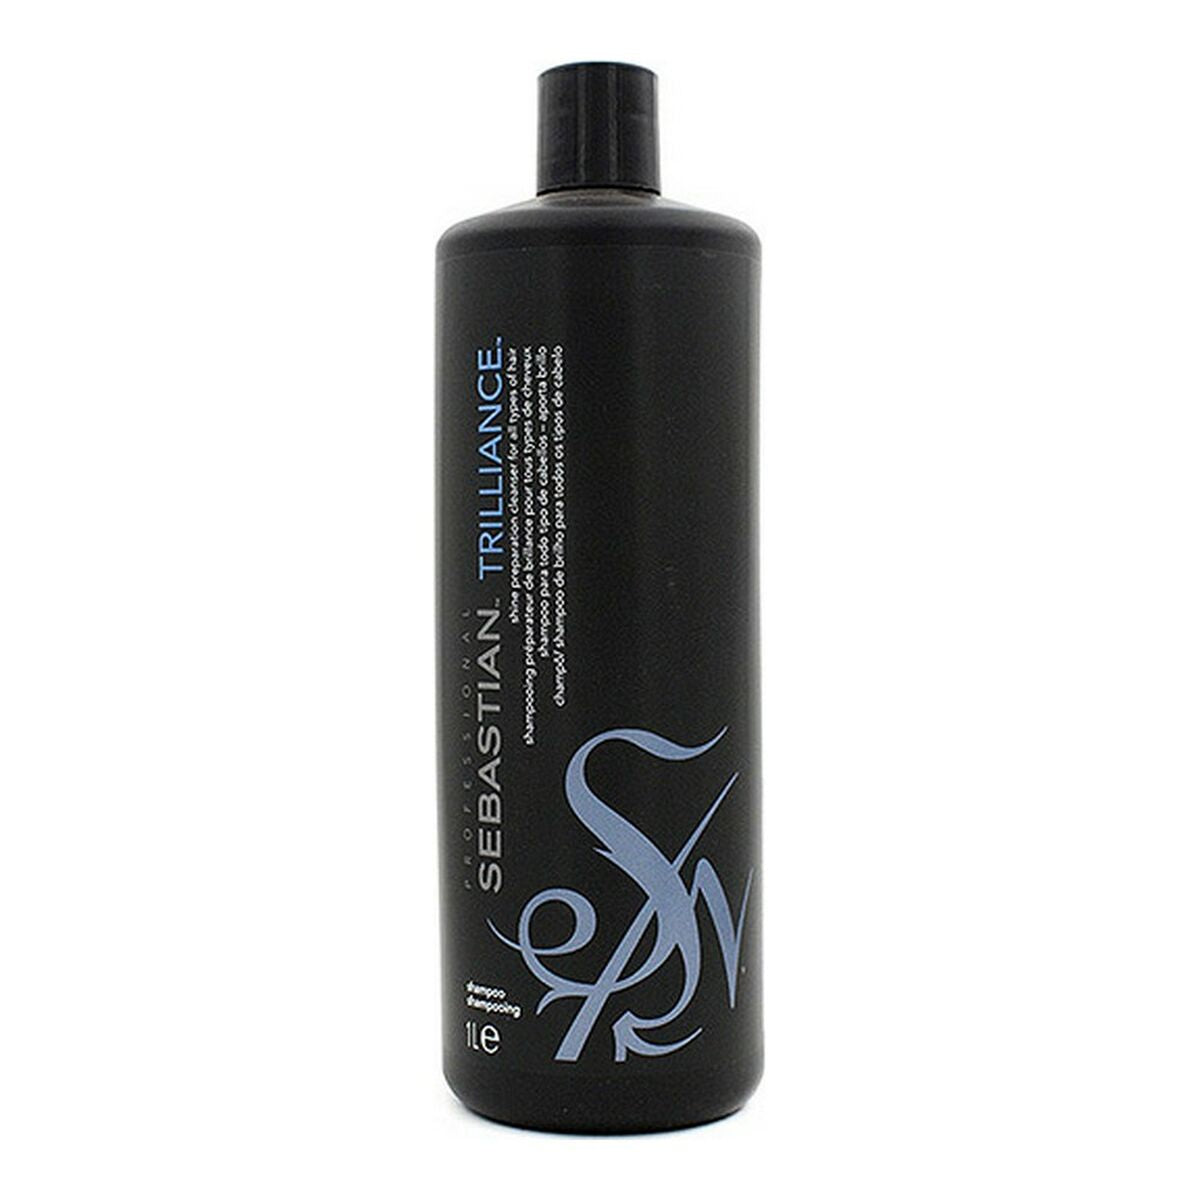 Shampoo Trilliance Sebastian-0